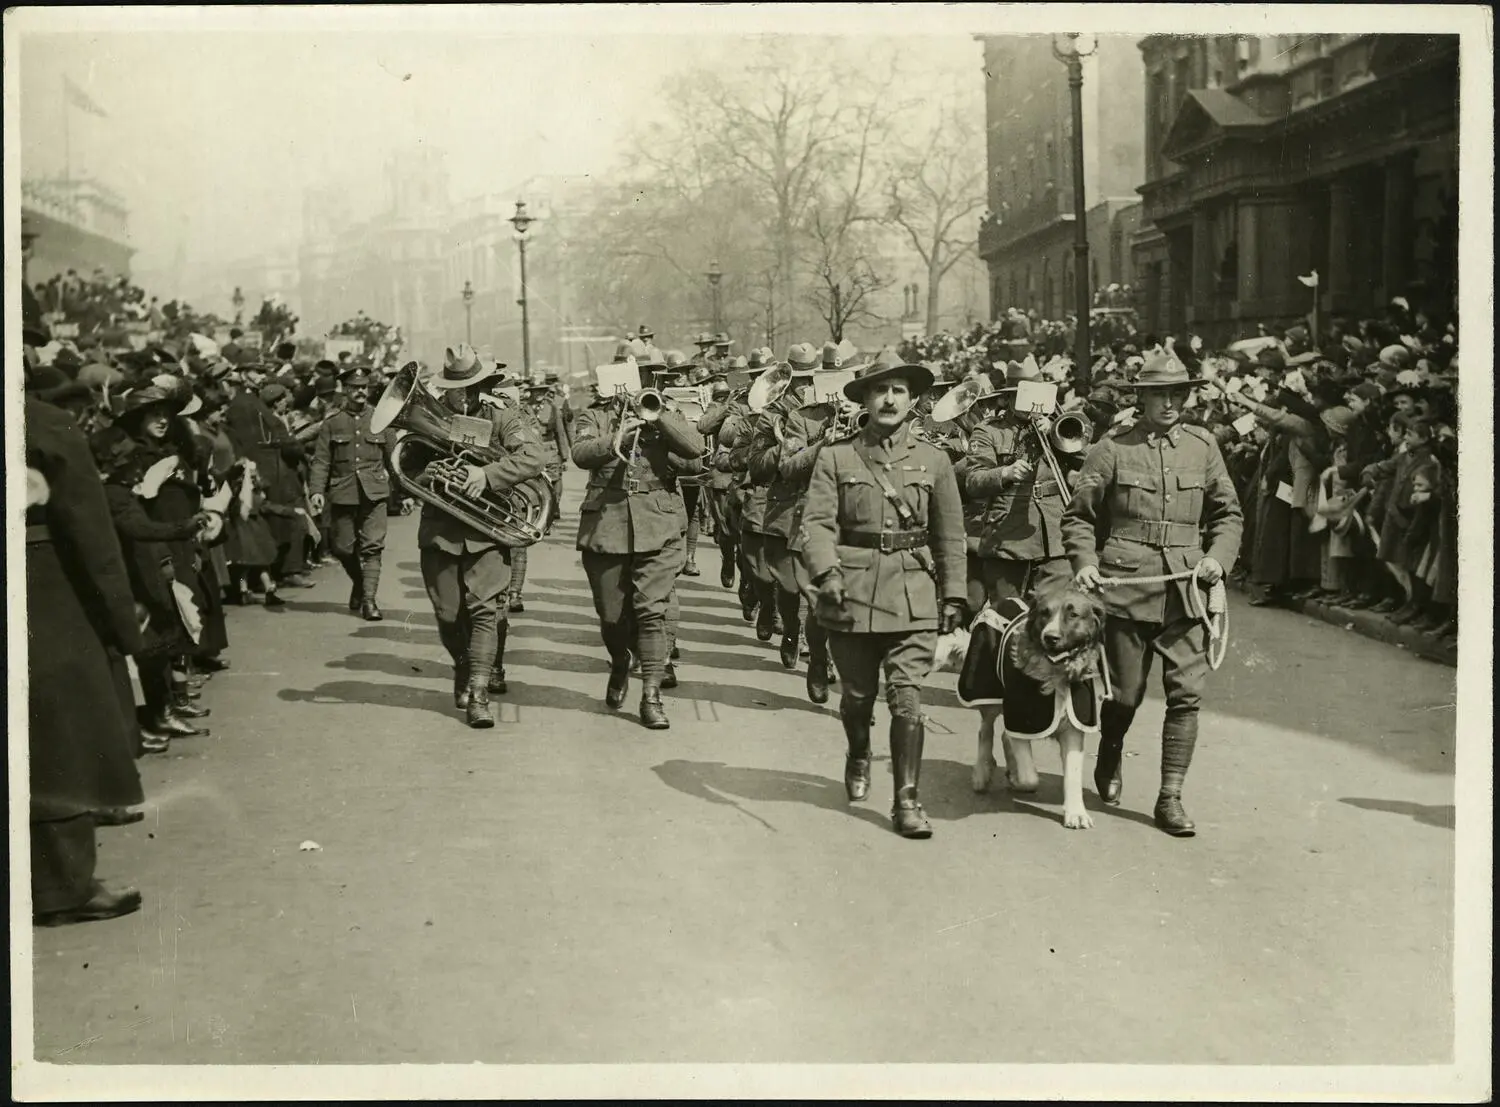 Photograph - New Zealand Servicemen, Anzac Day Parade, London, 1916